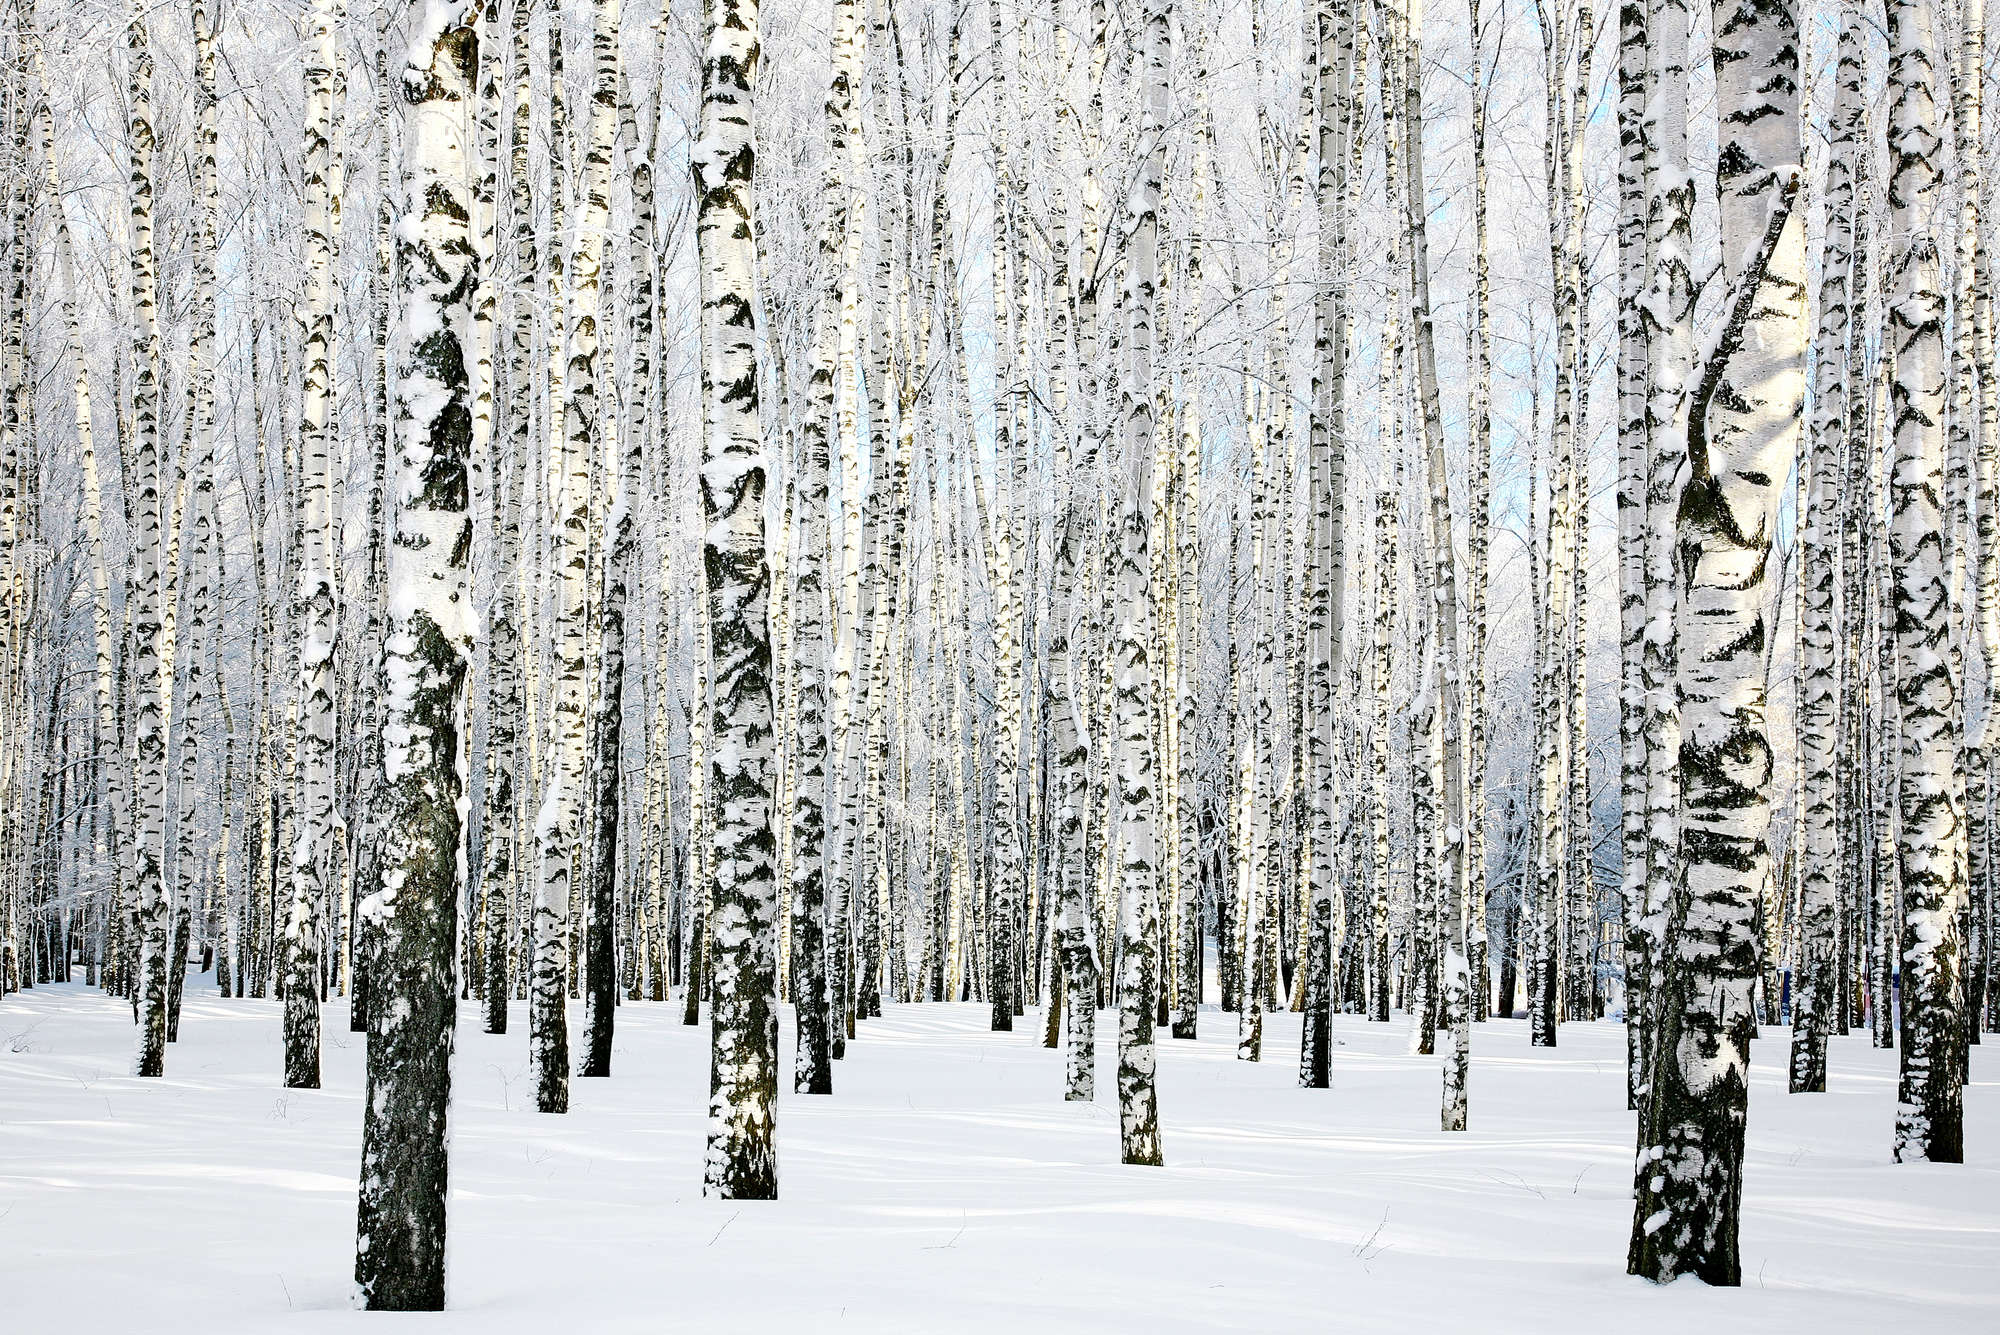             Natuurbehang Berkenbos in de winter op parelmoer gladde vlieseline
        